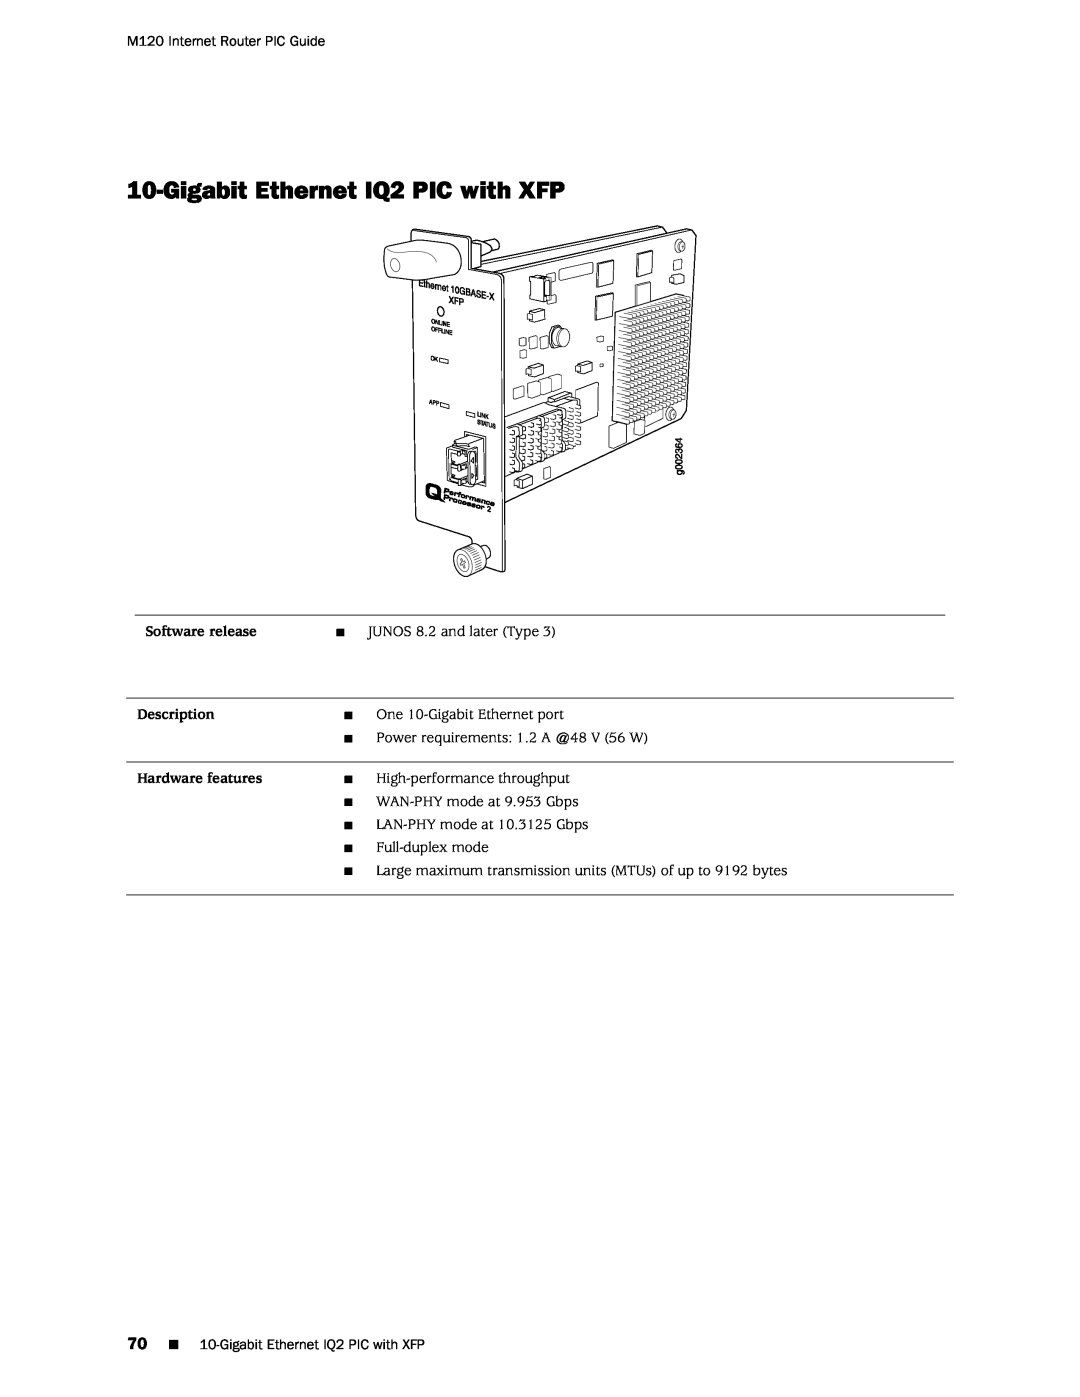 Juniper Networks manual Gigabit Ethernet IQ2 PIC with XFP, M120 Internet Router PIC Guide, Software release, Description 